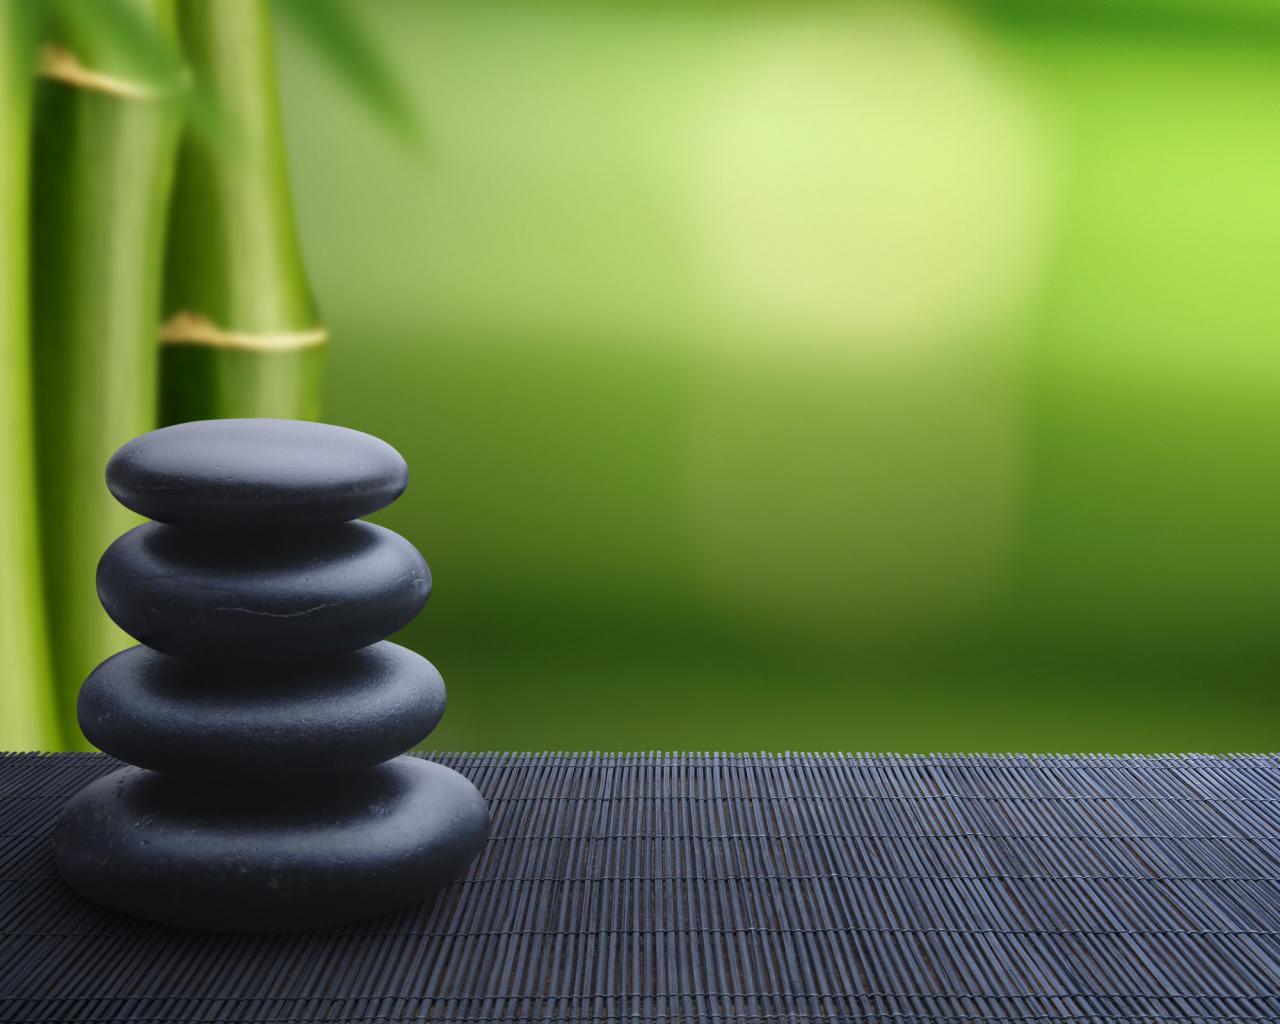 Awakening The Buddha Within Zen Fundamentals Can Change Person S